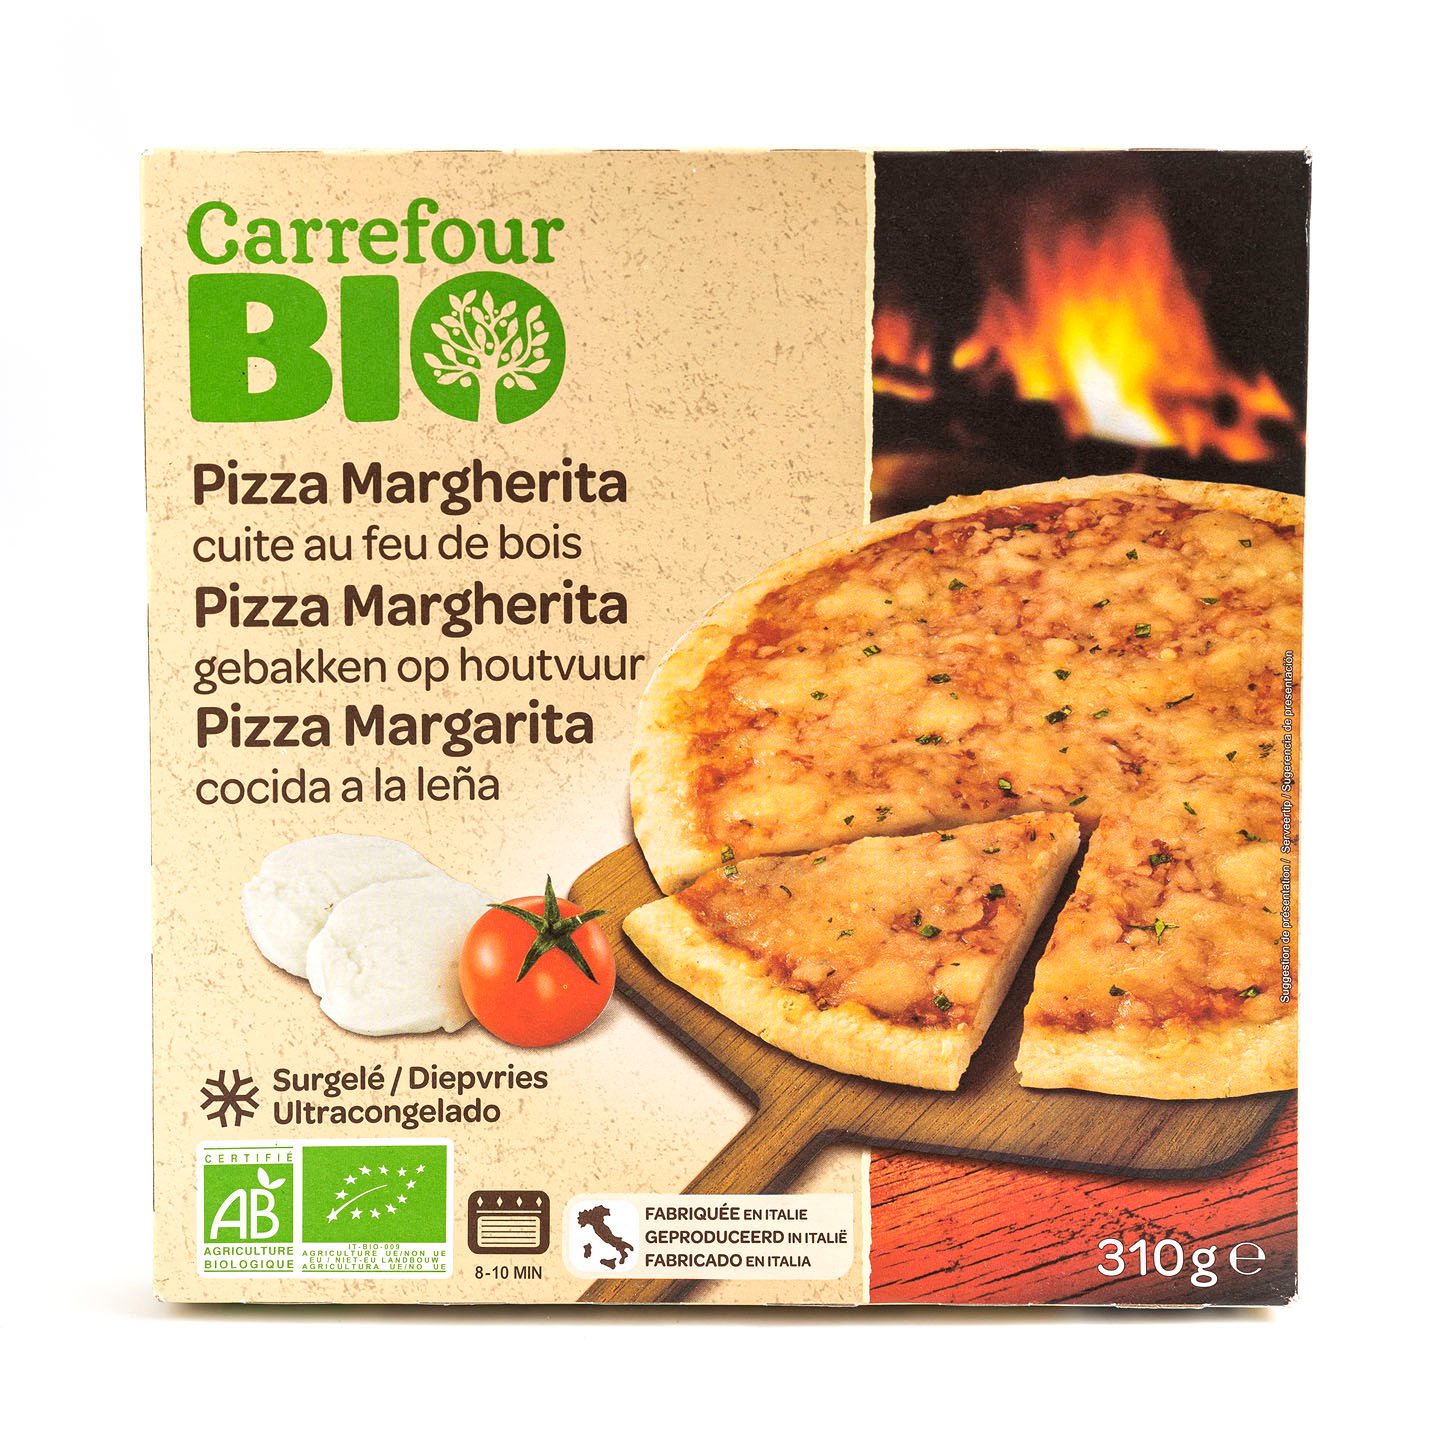 Pizza Margherita Carrefour Bio 310g